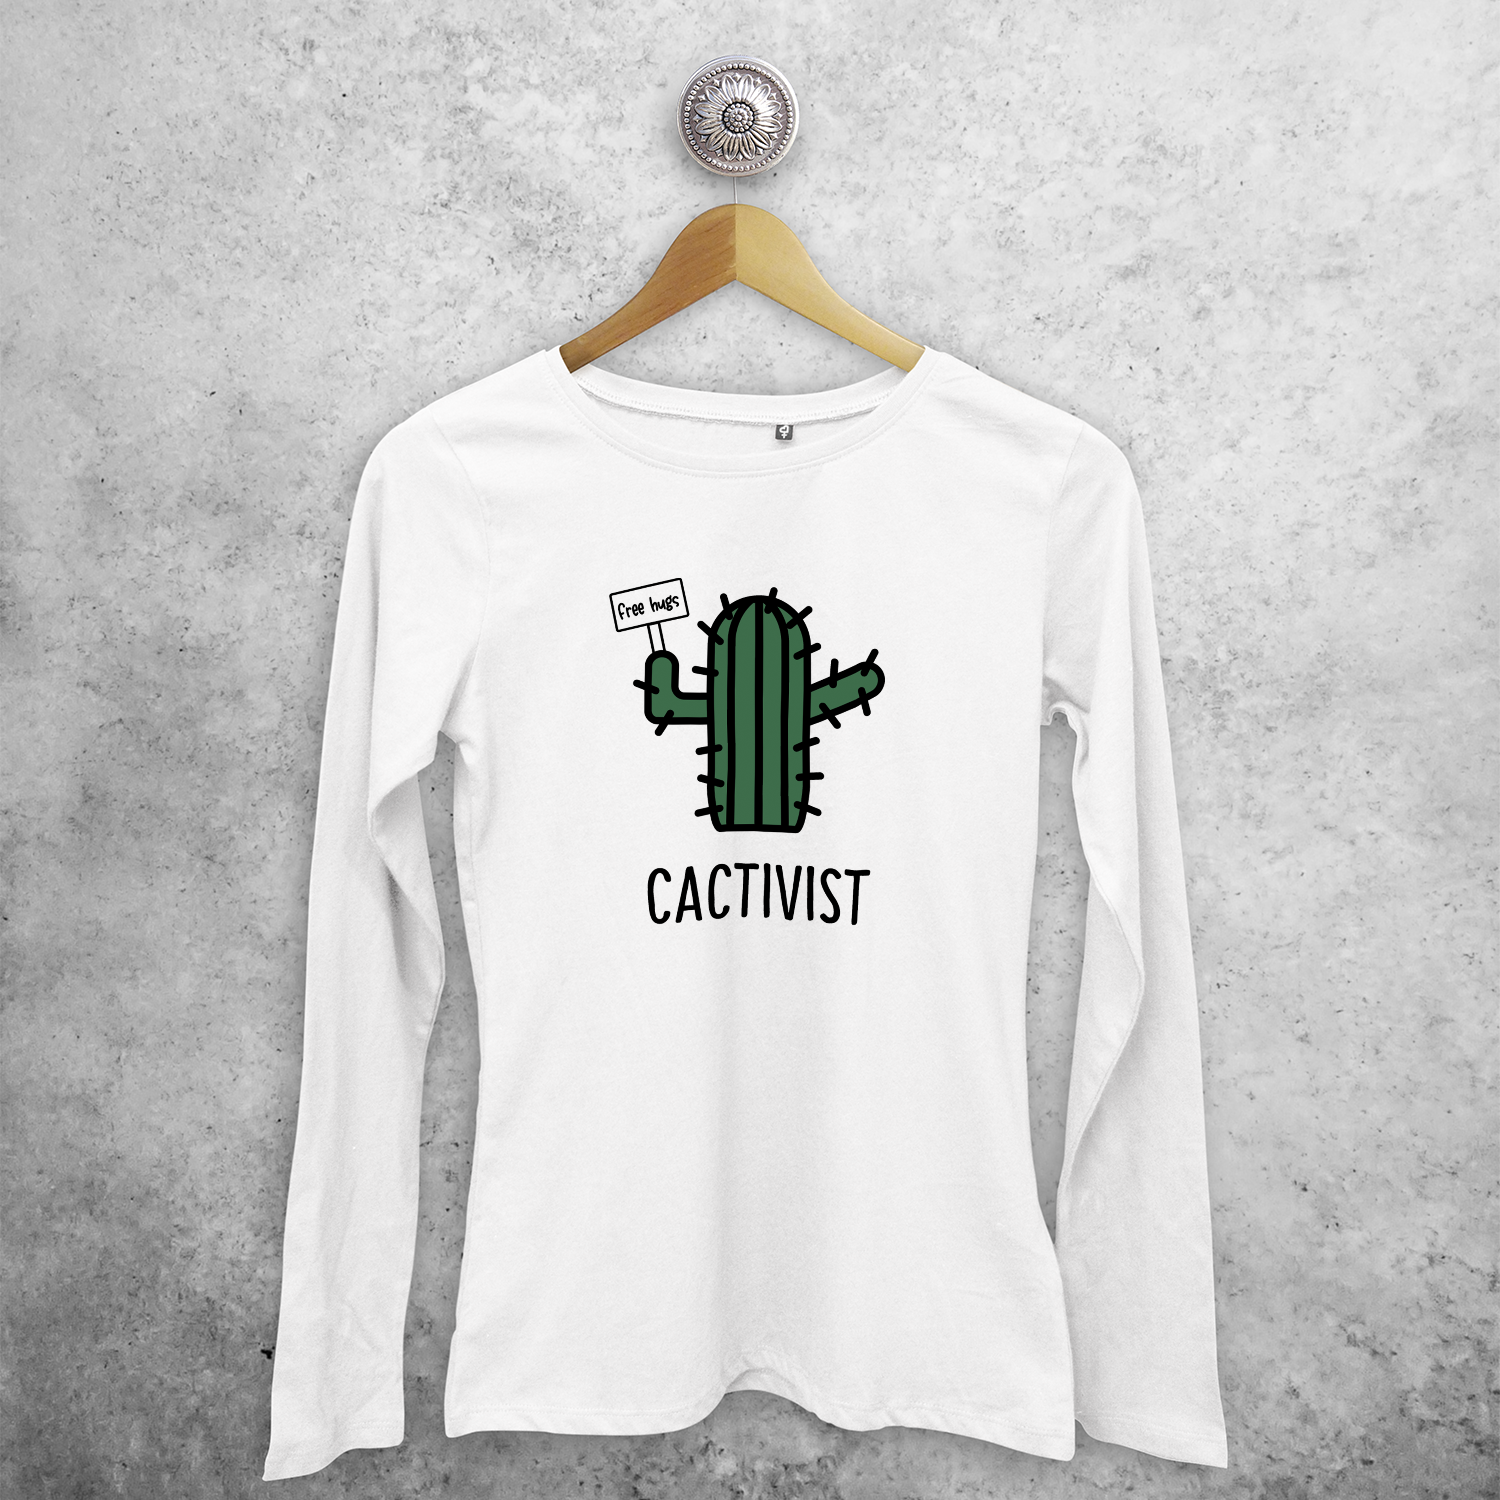 'Cactivist' adult longsleeve shirt